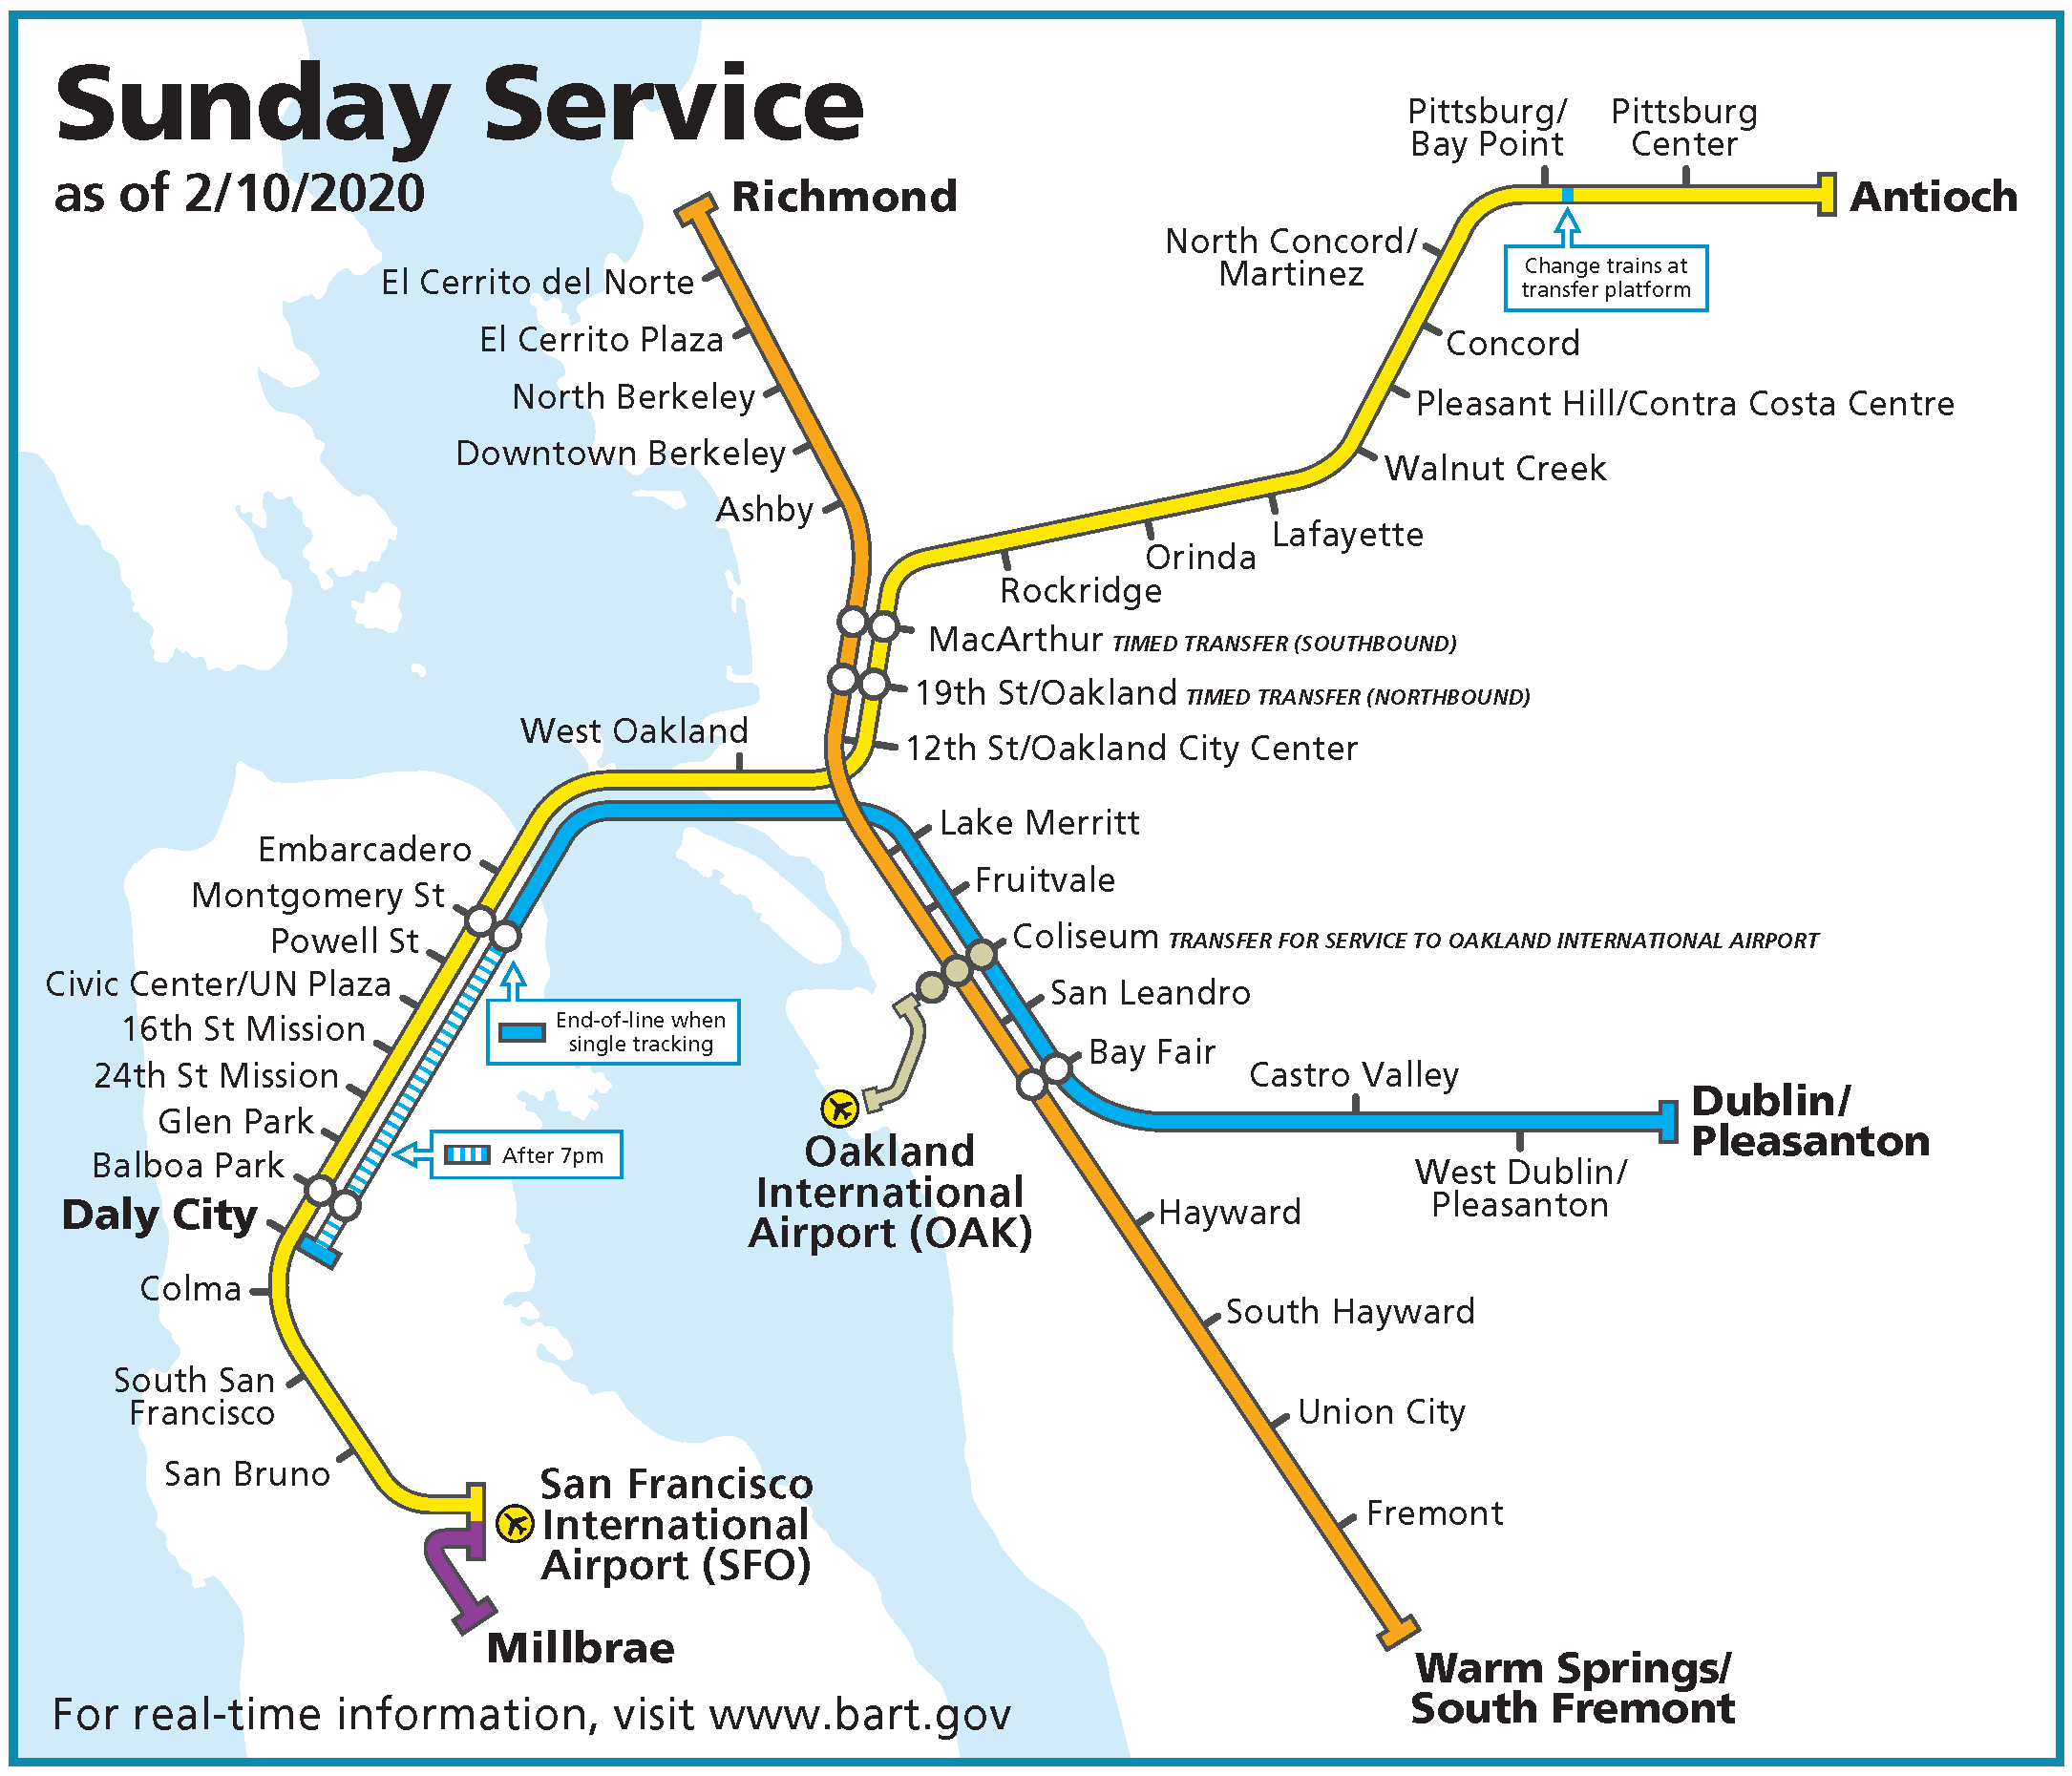 BART new Sunday service map beginning on February 2020